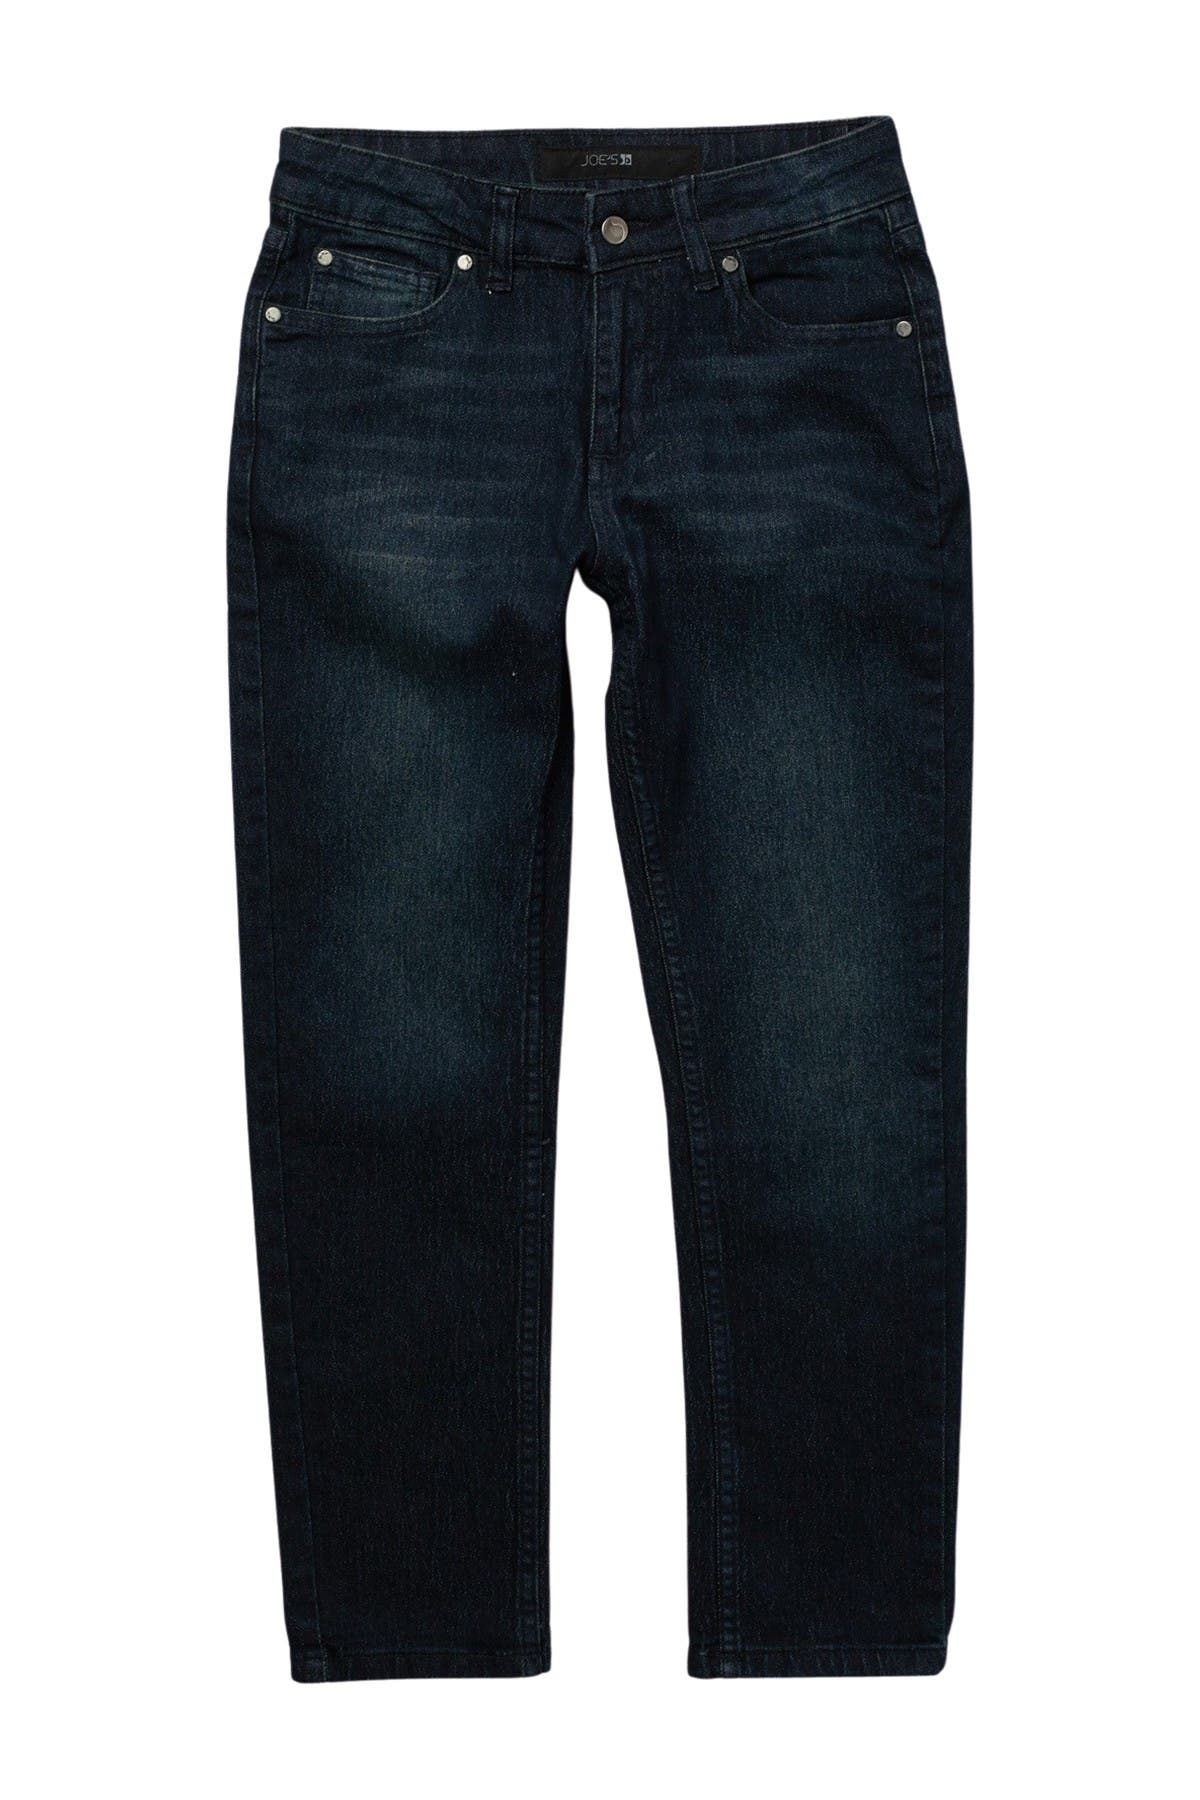 denim jeans with straps